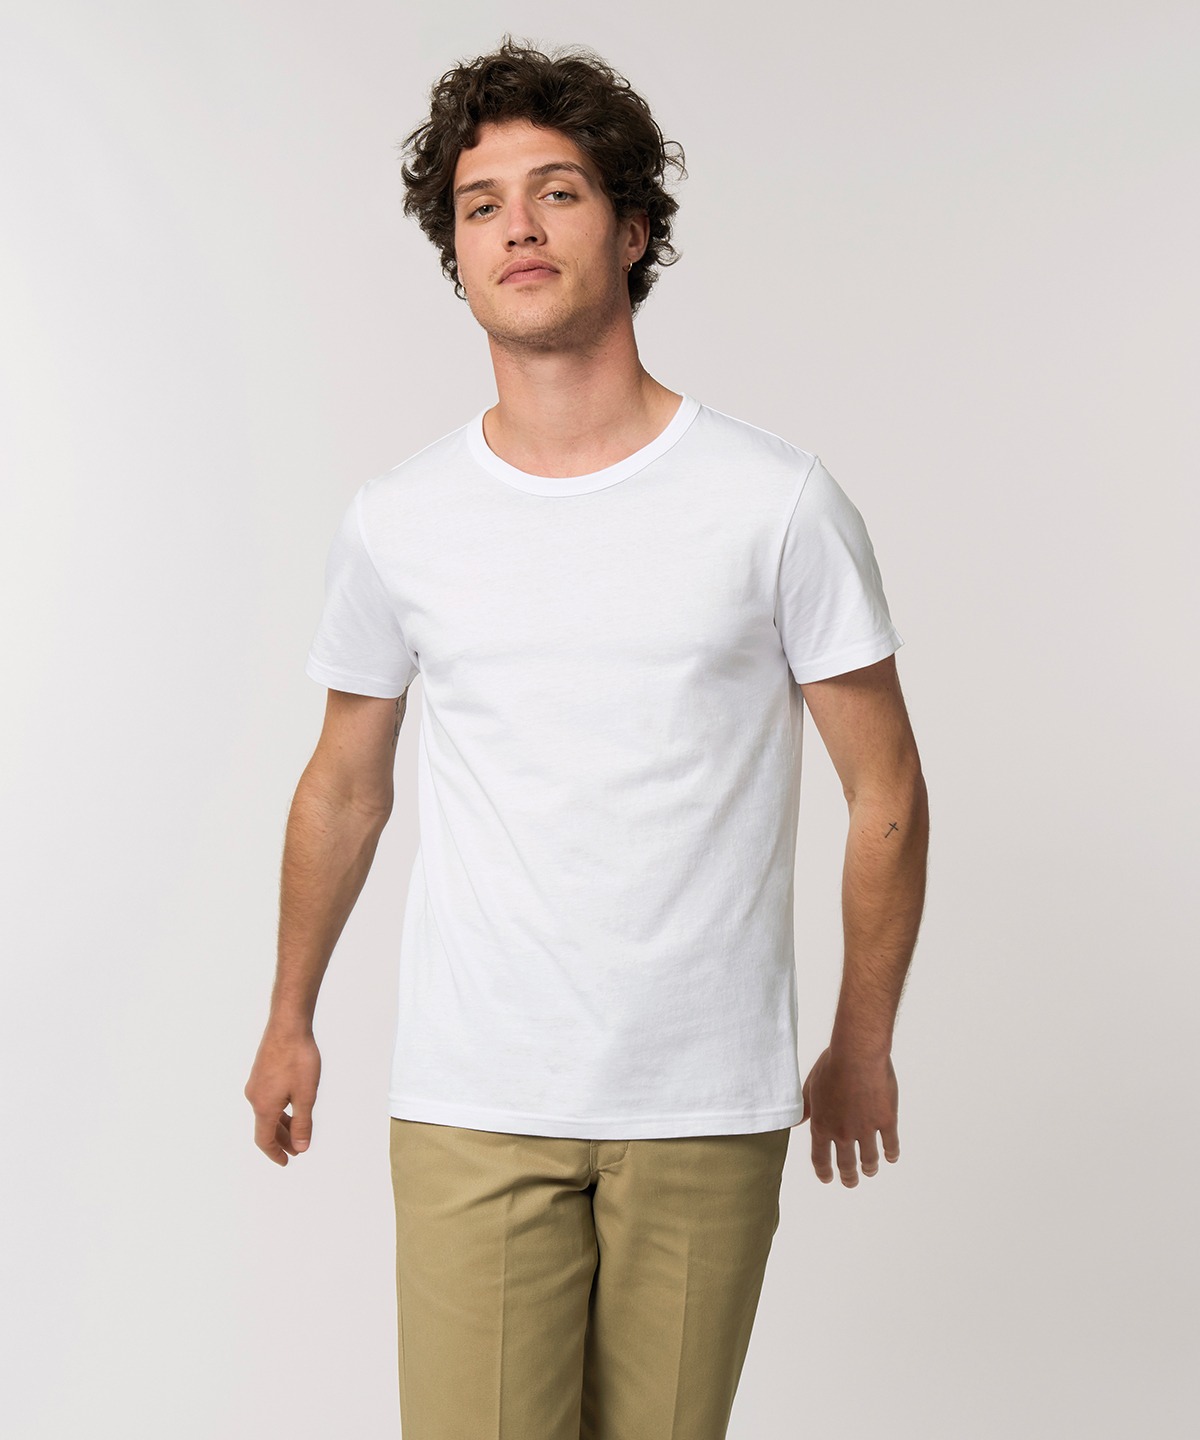 Stanley Adorer, The men's light t-shirt